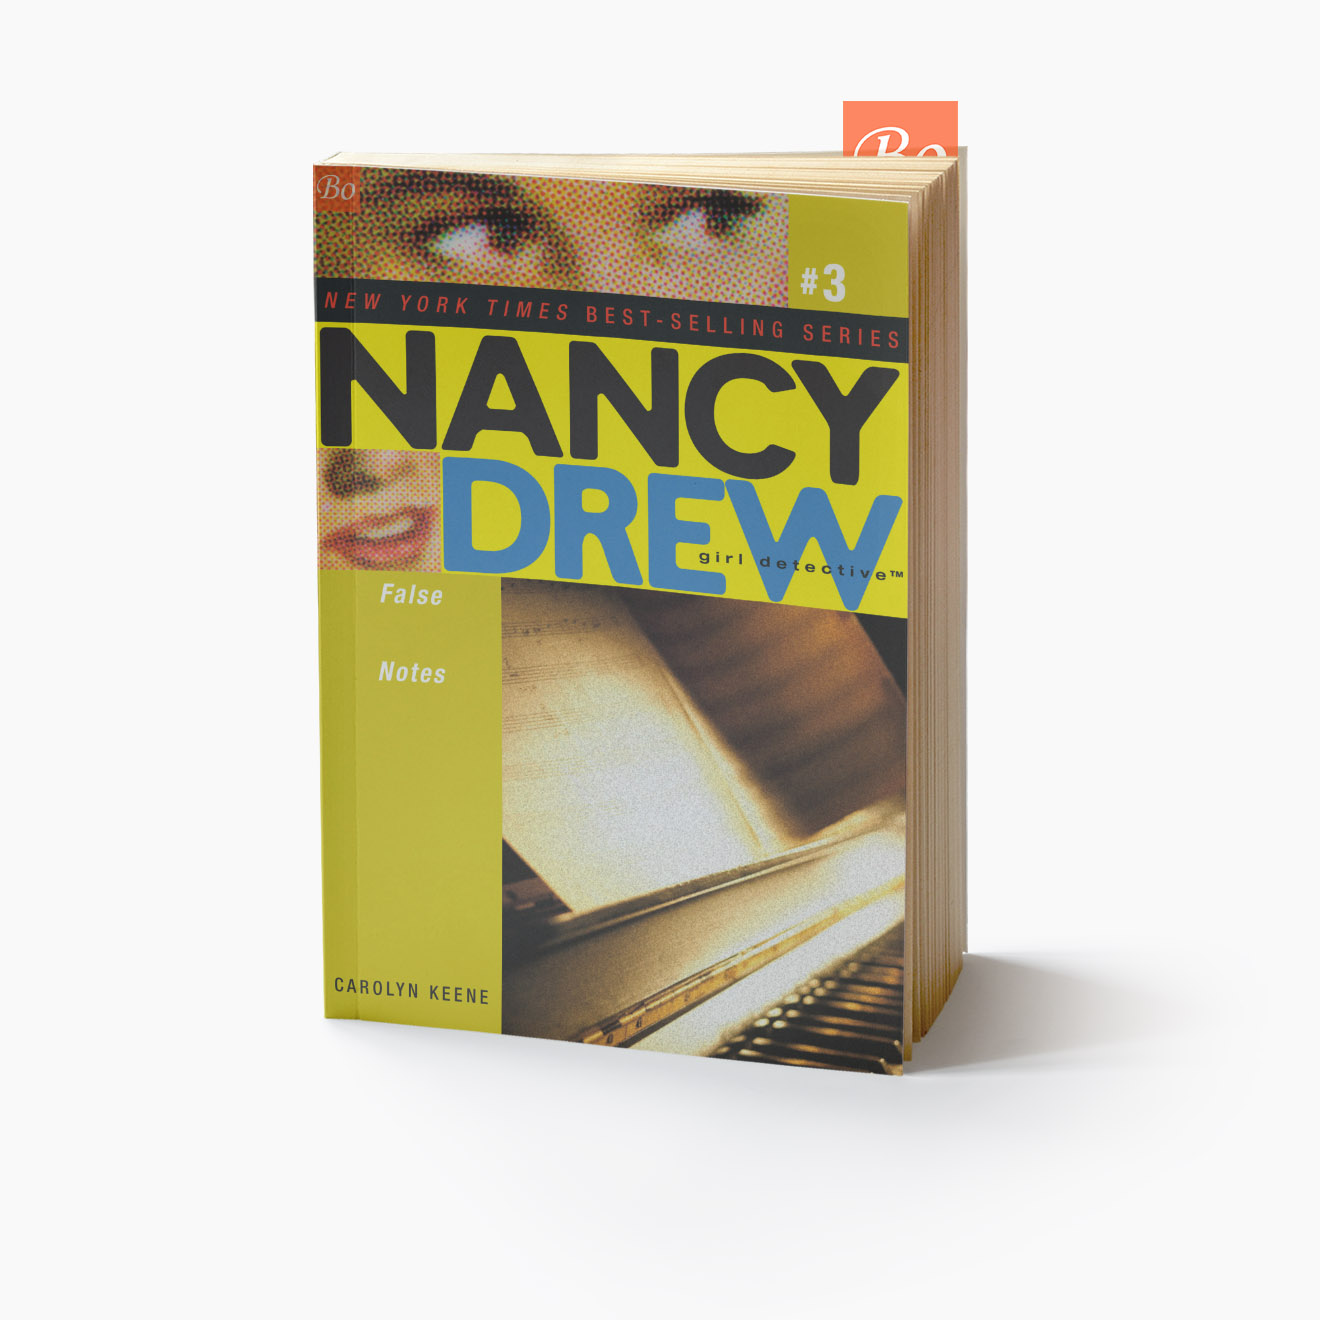 神探南茜 Nancy Drew girl detective 系列